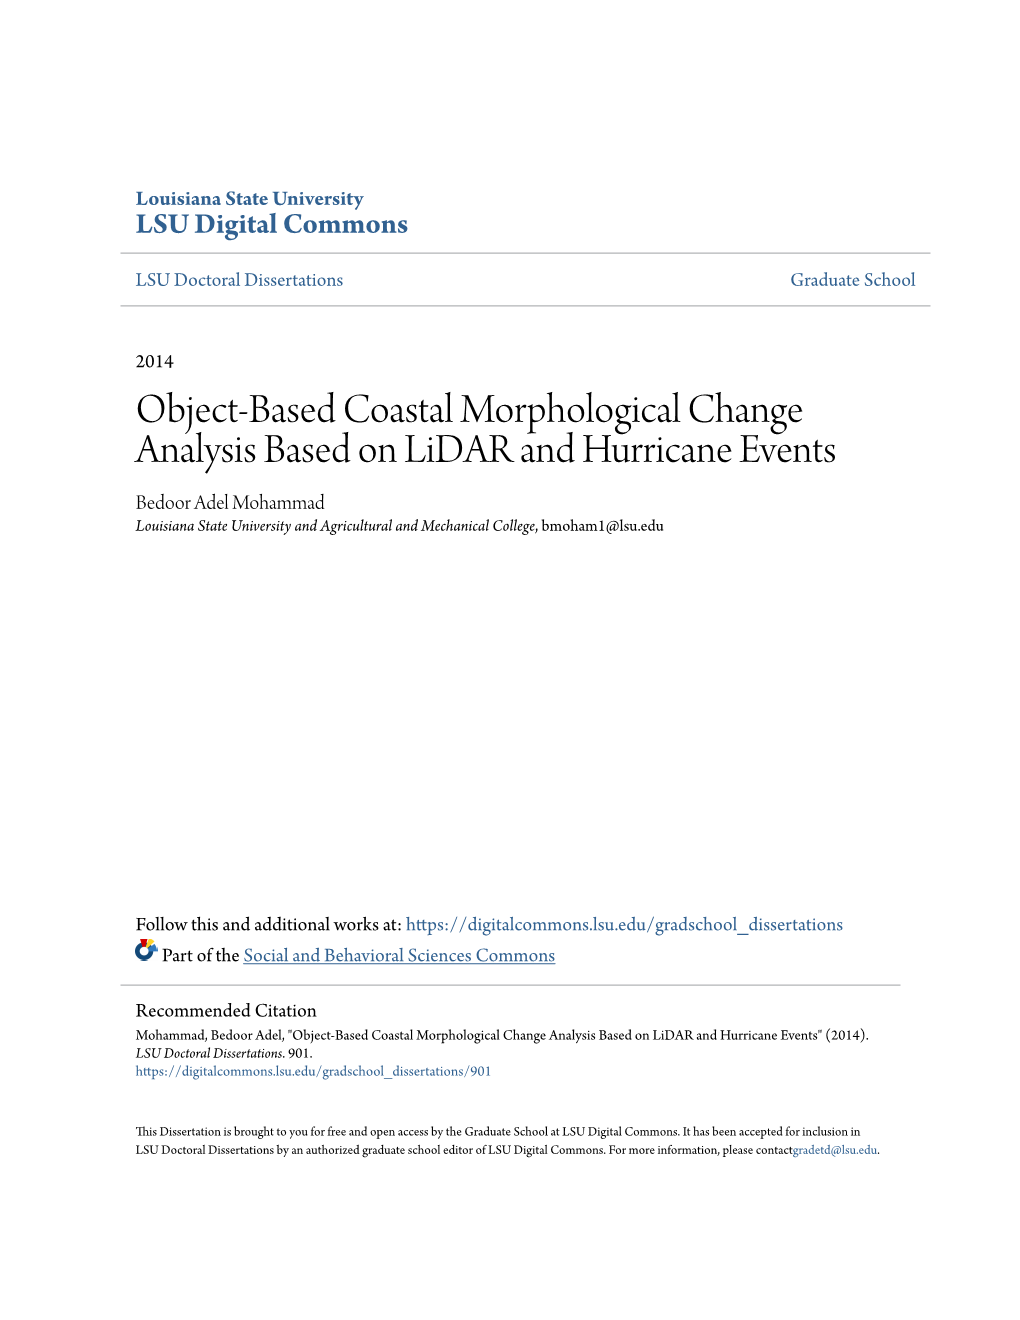 Object-Based Coastal Morphological Change Analysis Based on Lidar and Hurricane Events